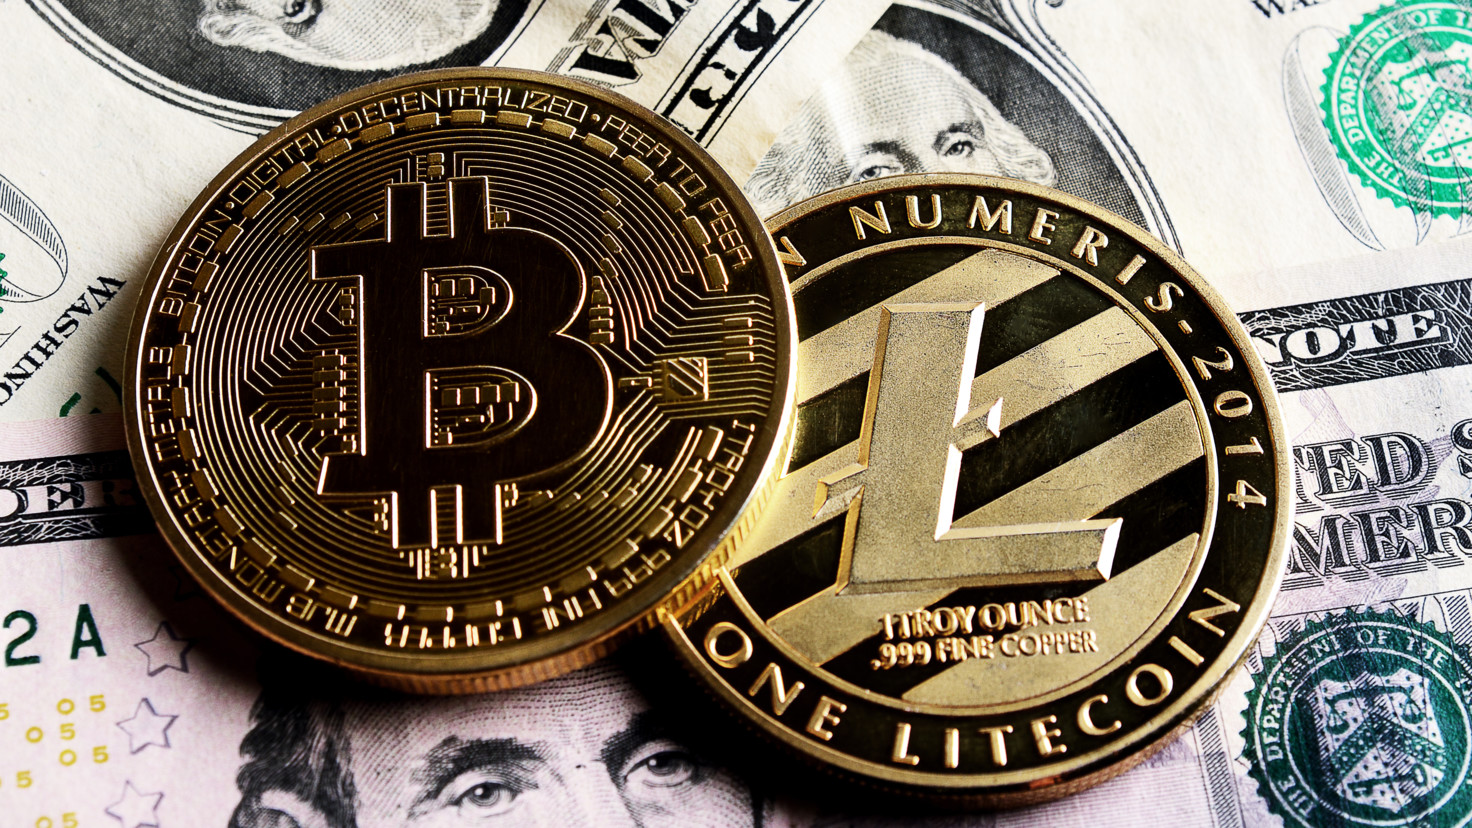 Is litecoin forked from bitcoin bitcoin cash money creation not fair